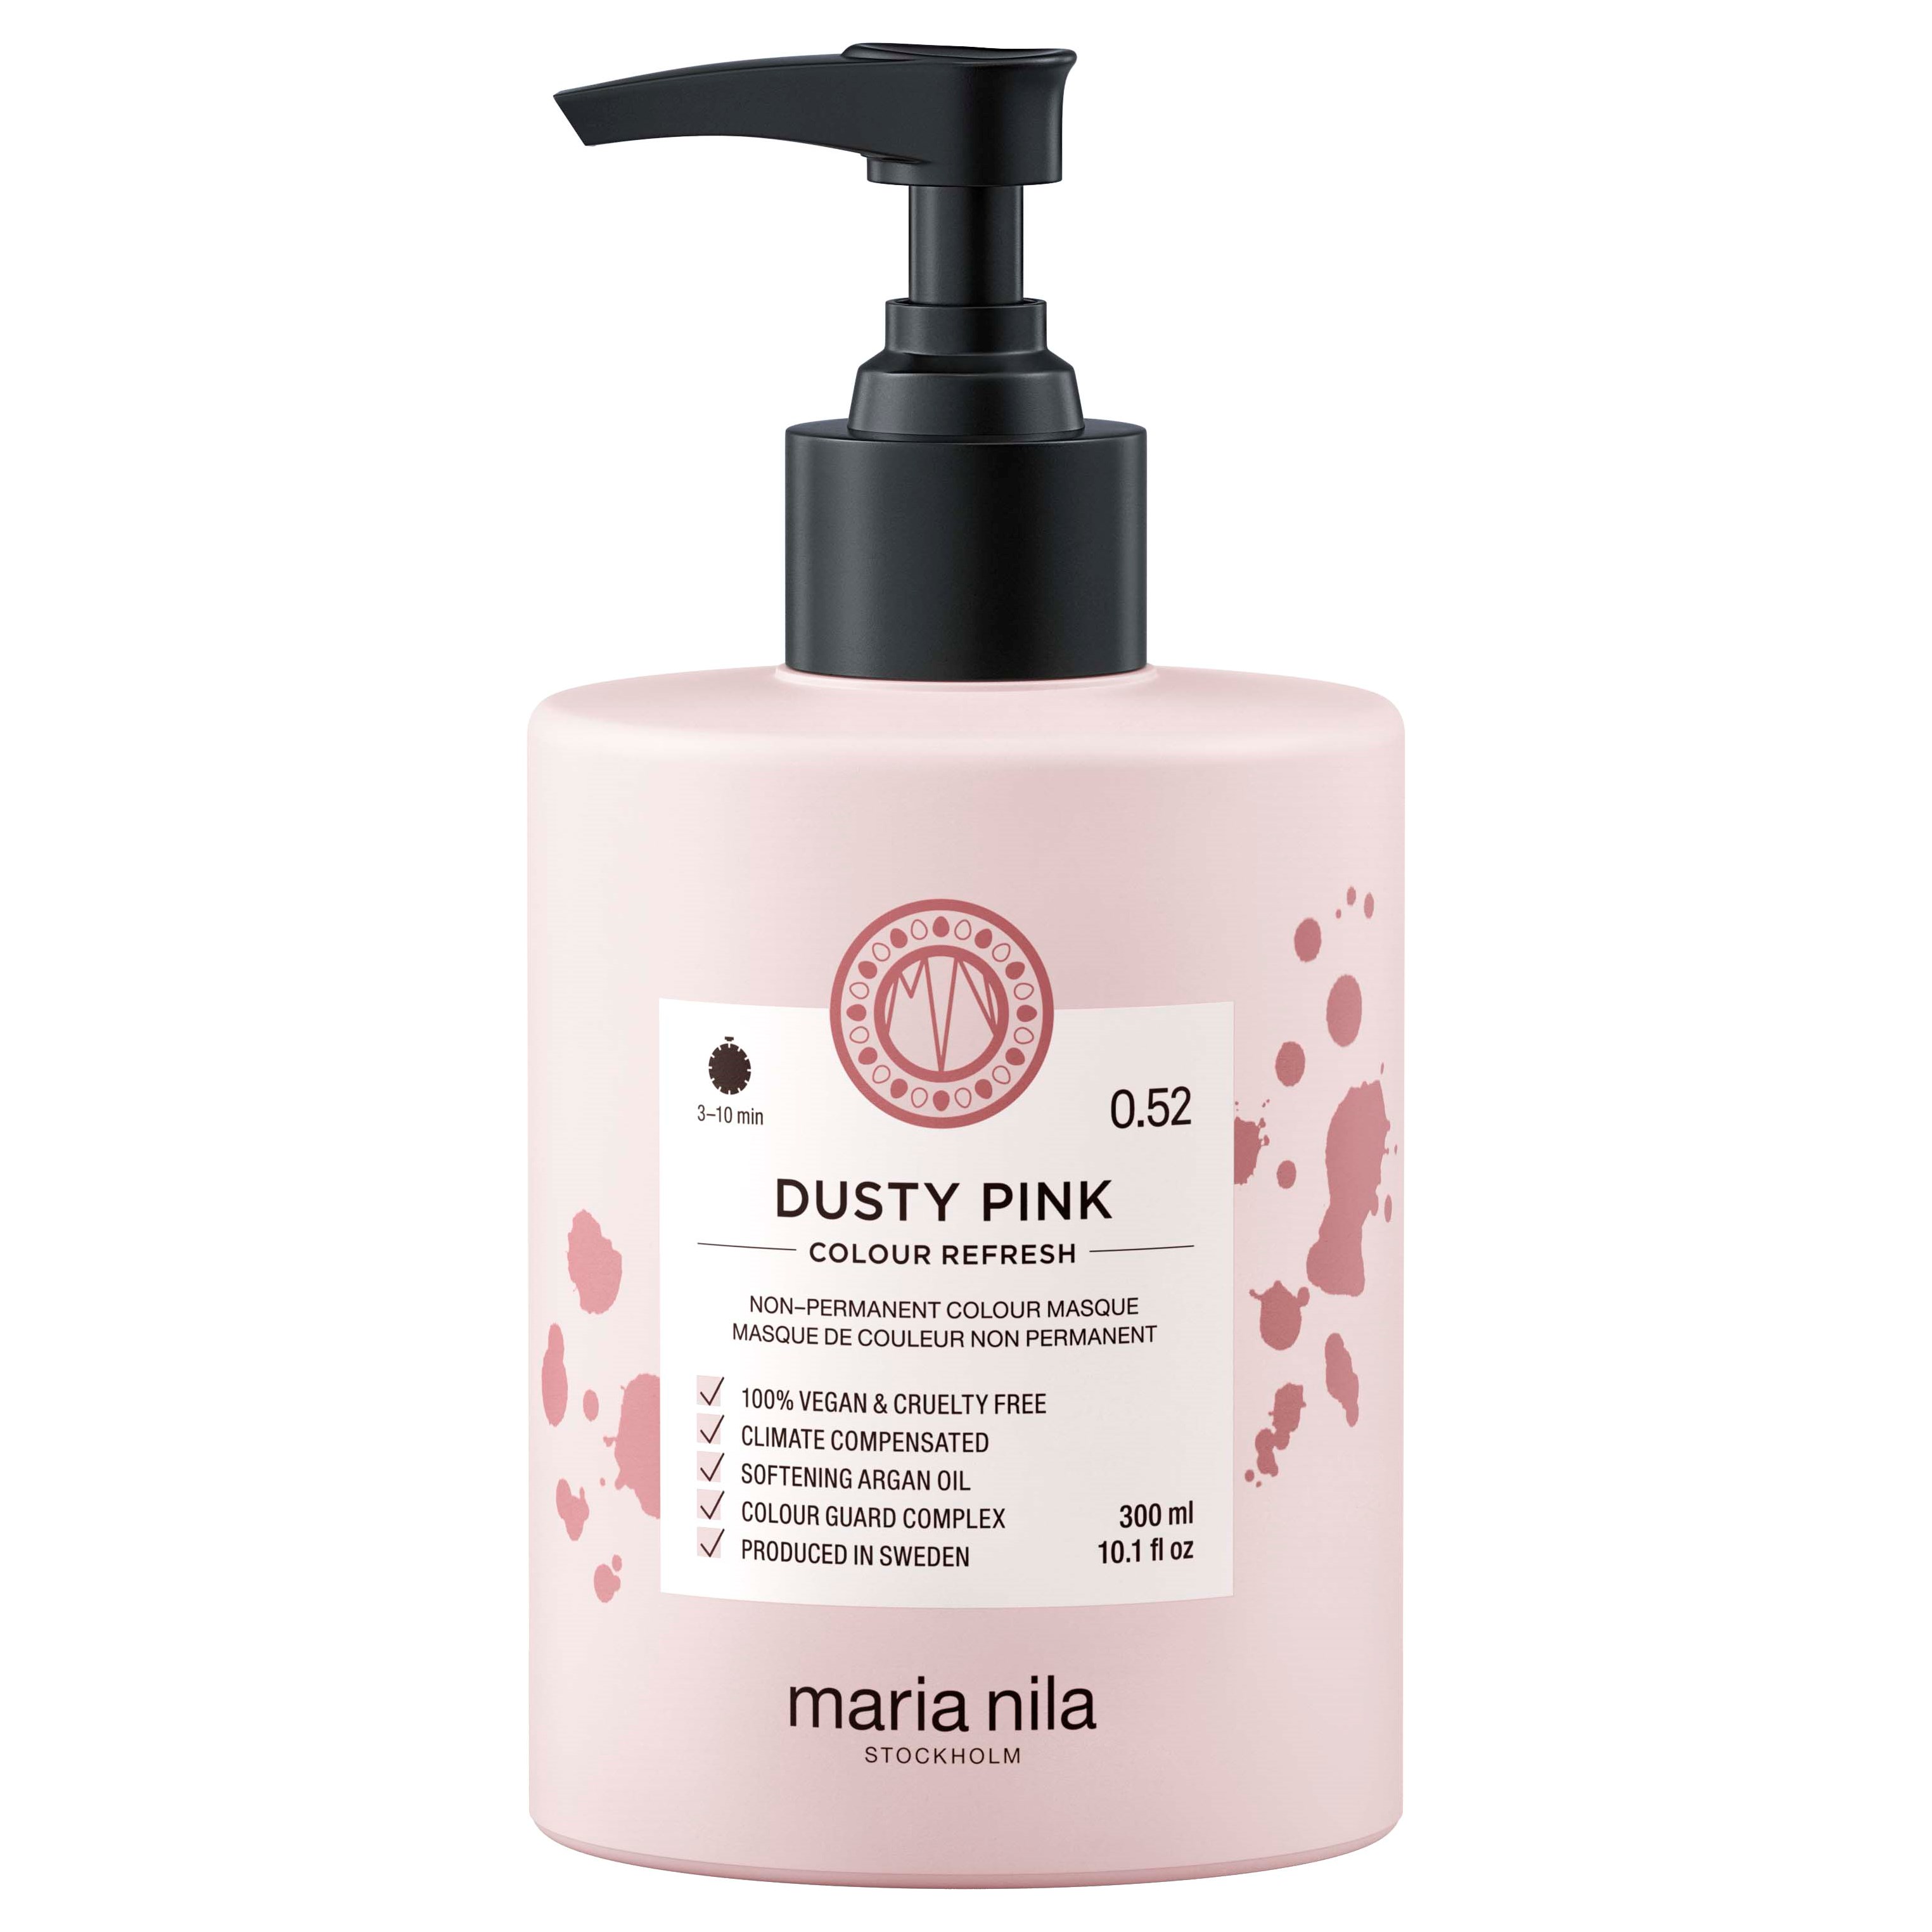 Maria Nila Colour Refresh Dusty Pink, 300ml